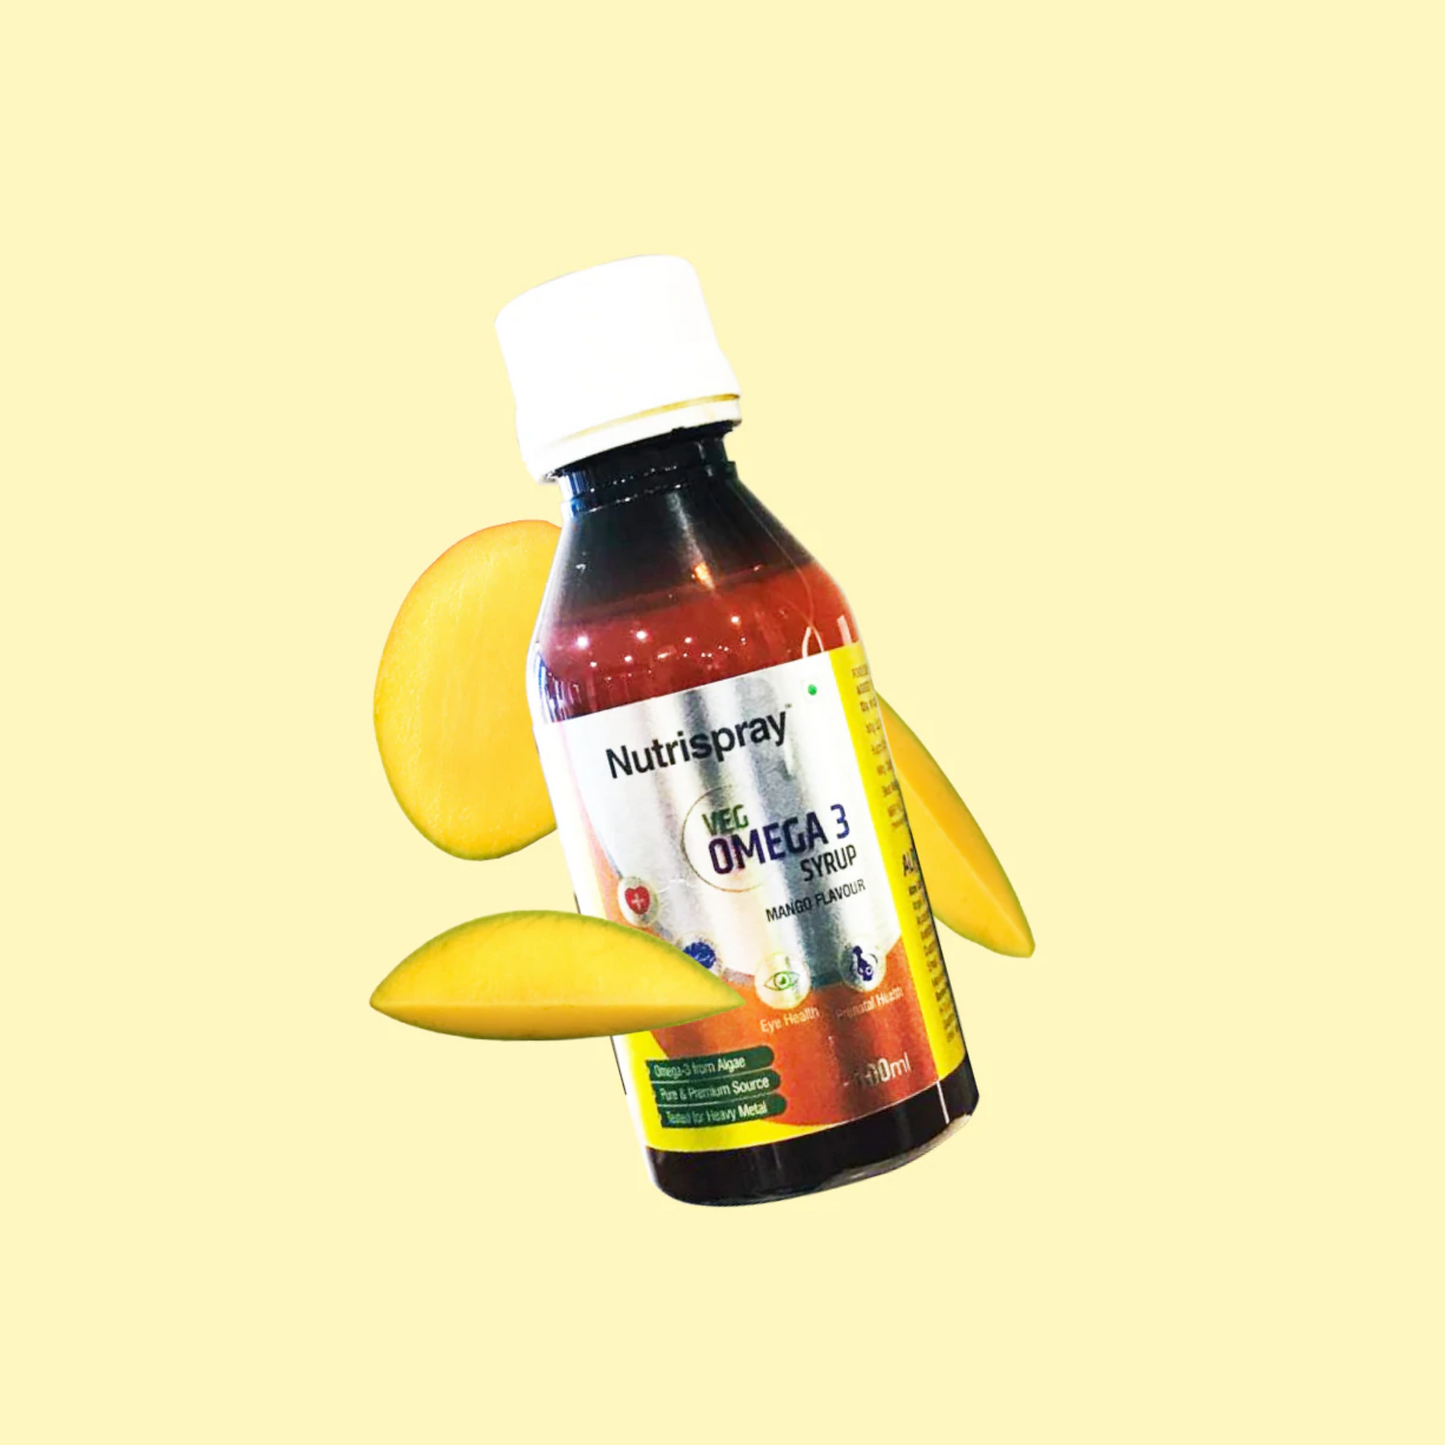 Nutrispray™ Veg OMEGA 3 Syrup